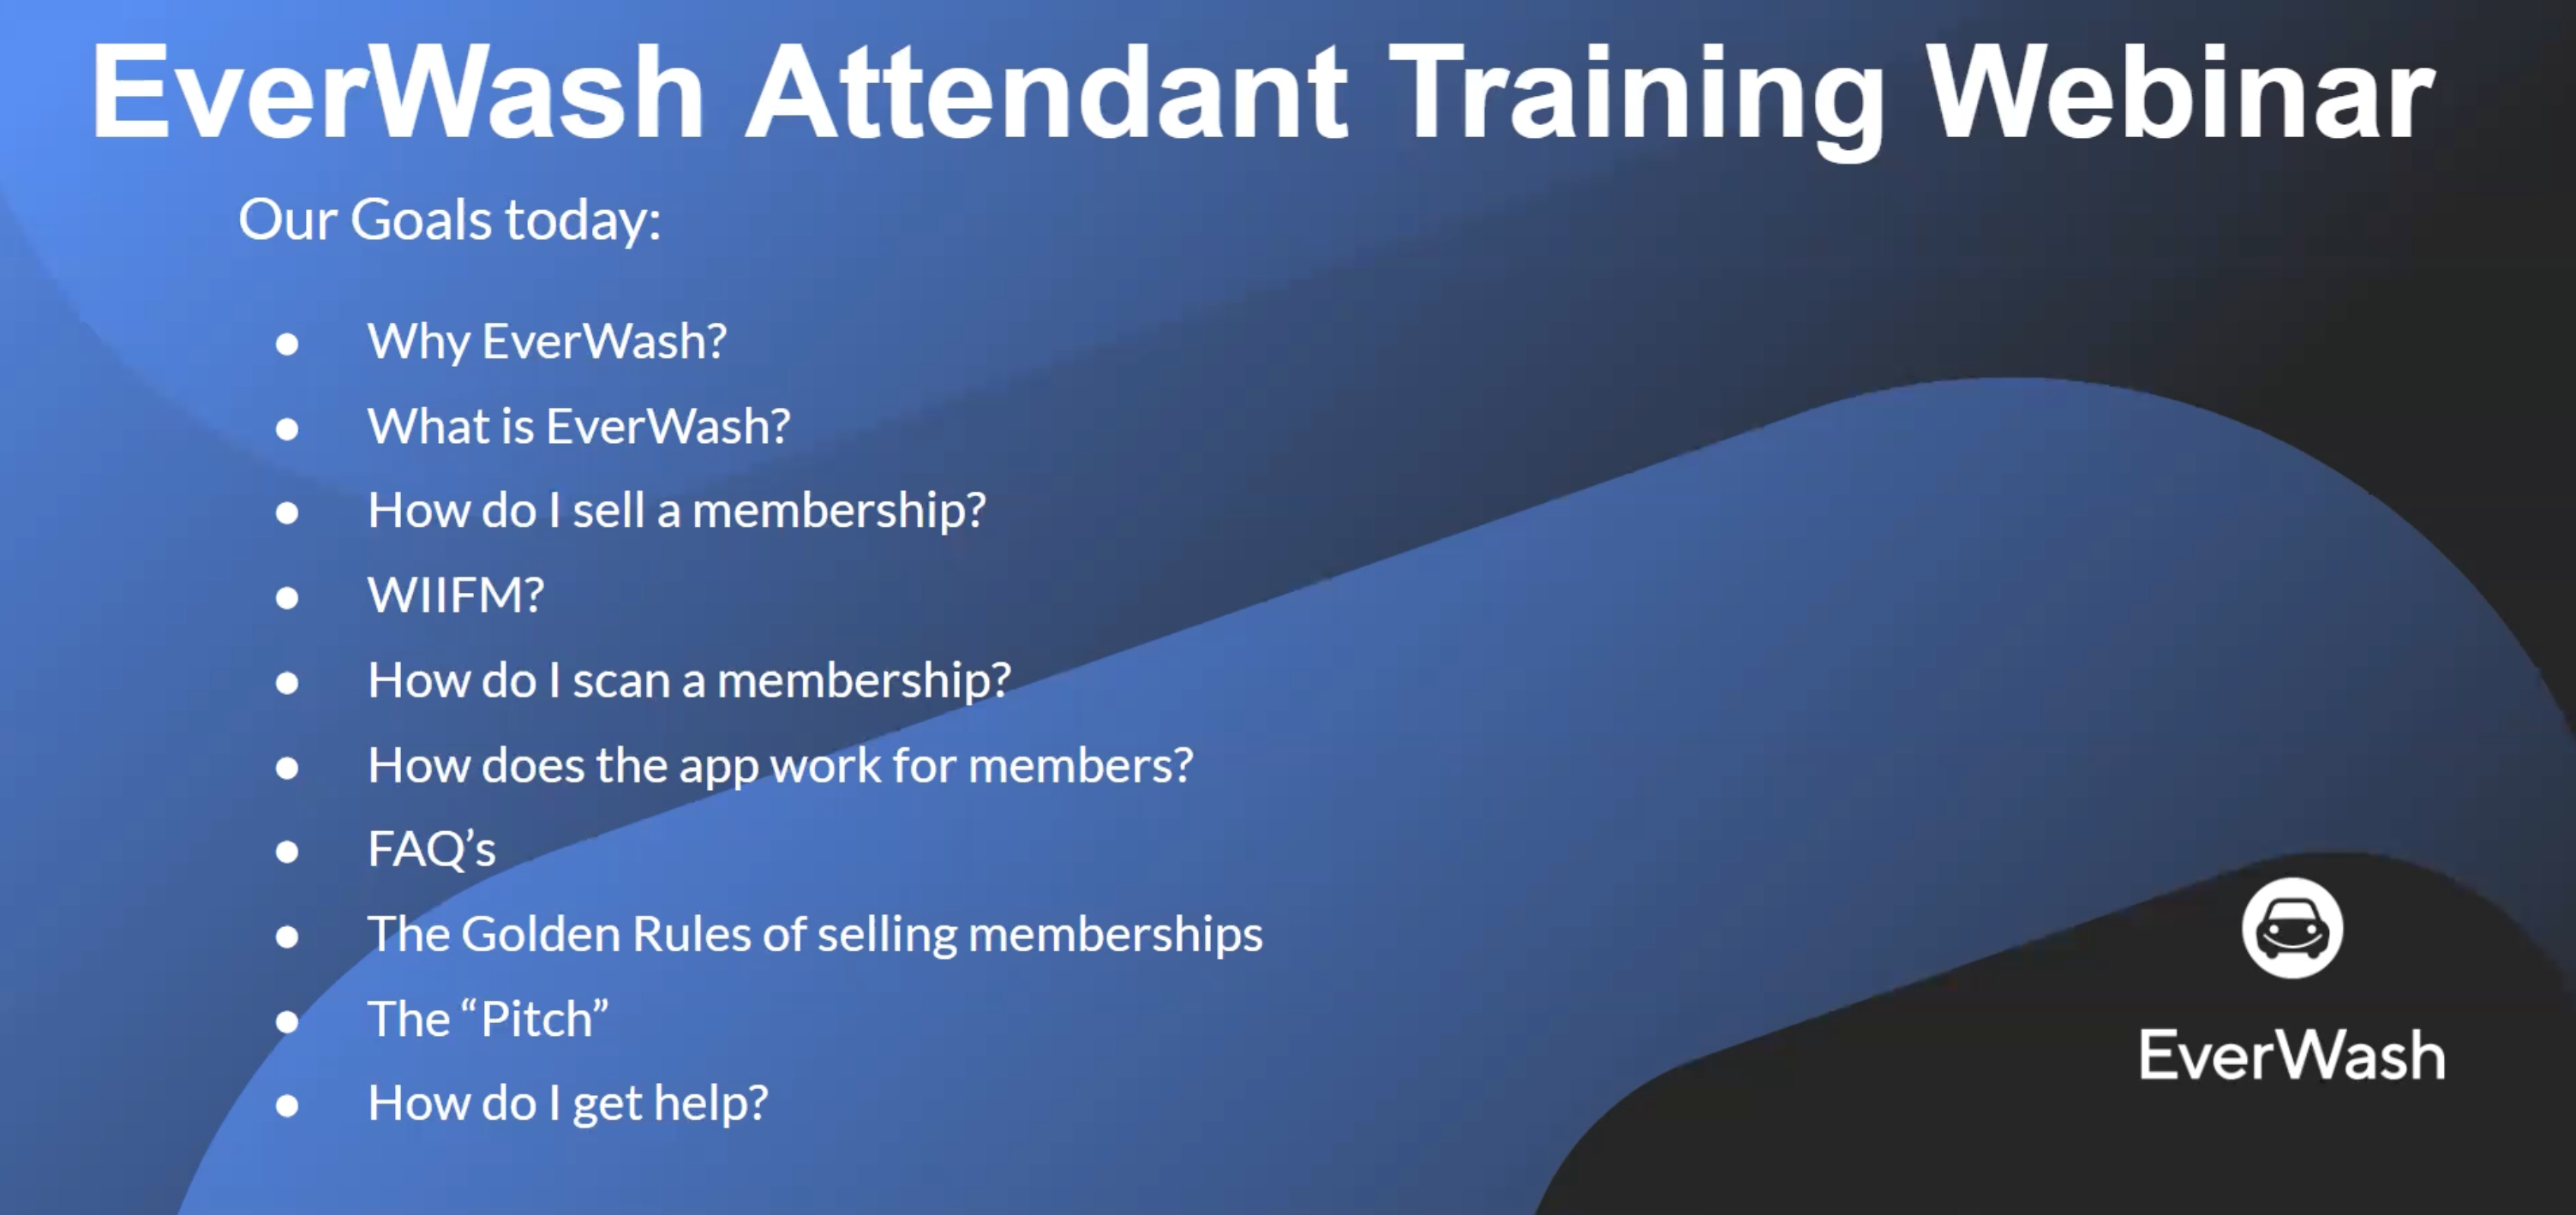 New Attendant Training Webinar